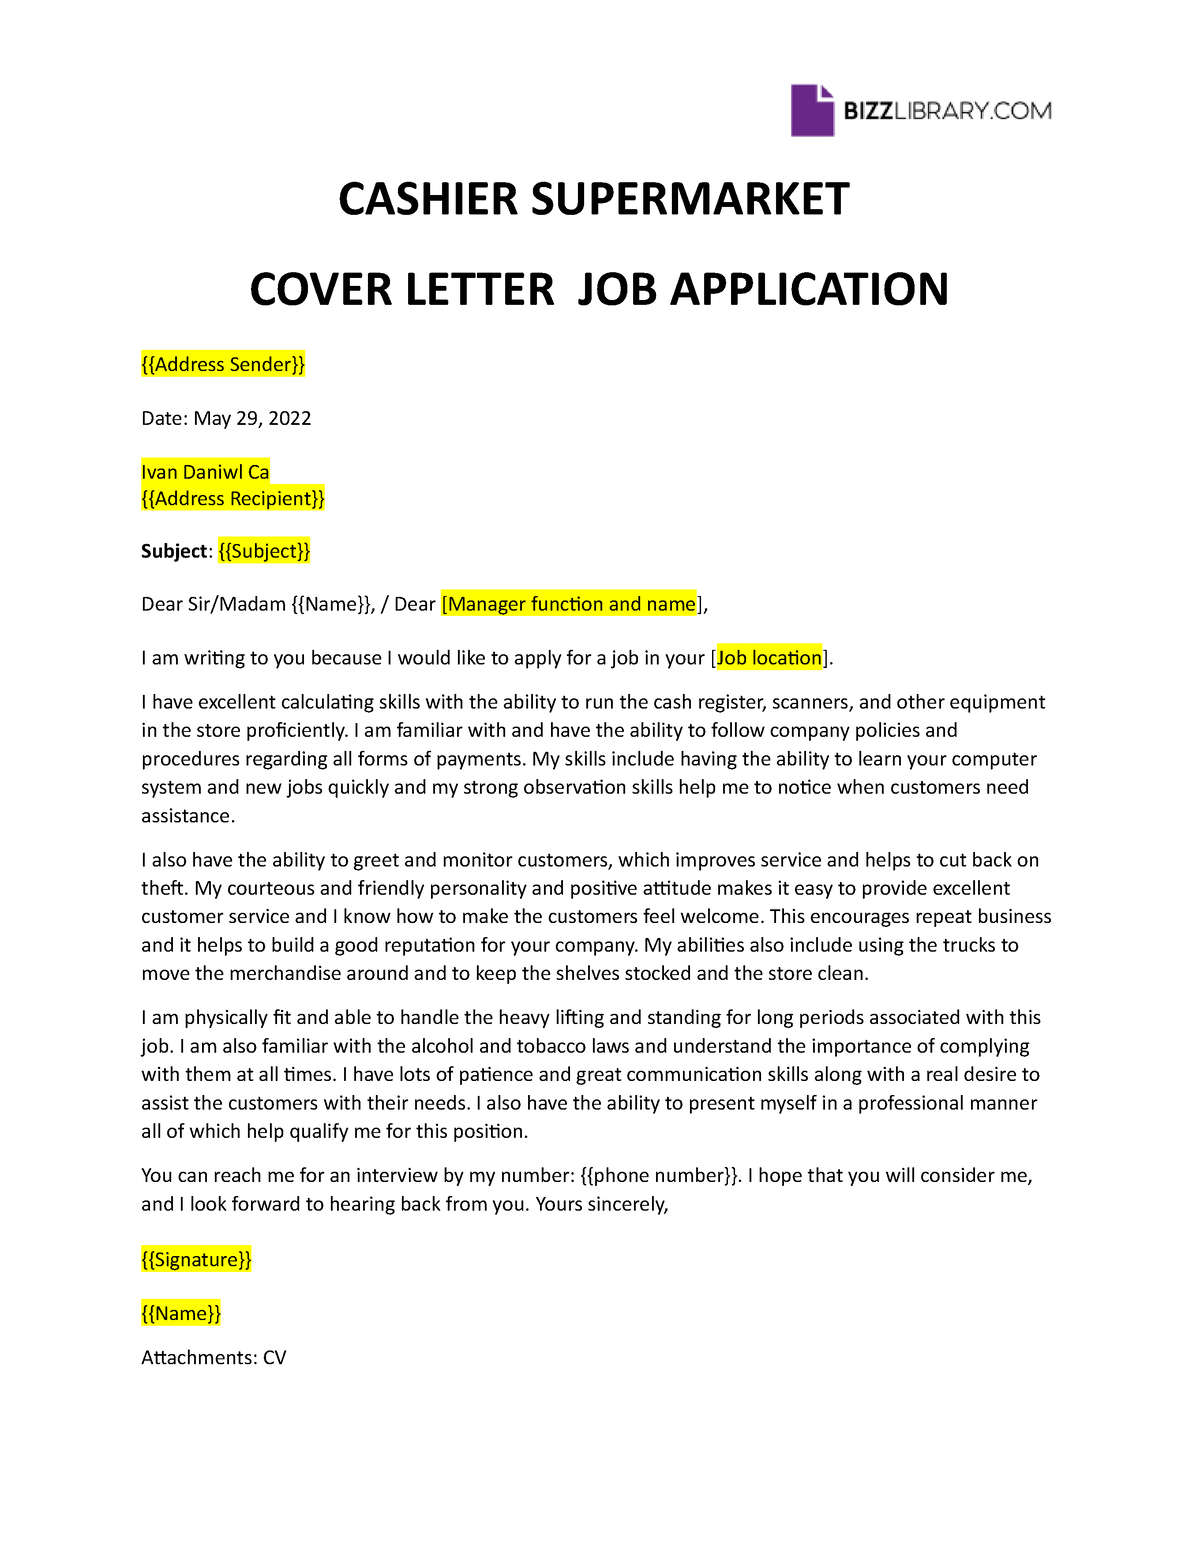 application letter for a job at supermarket